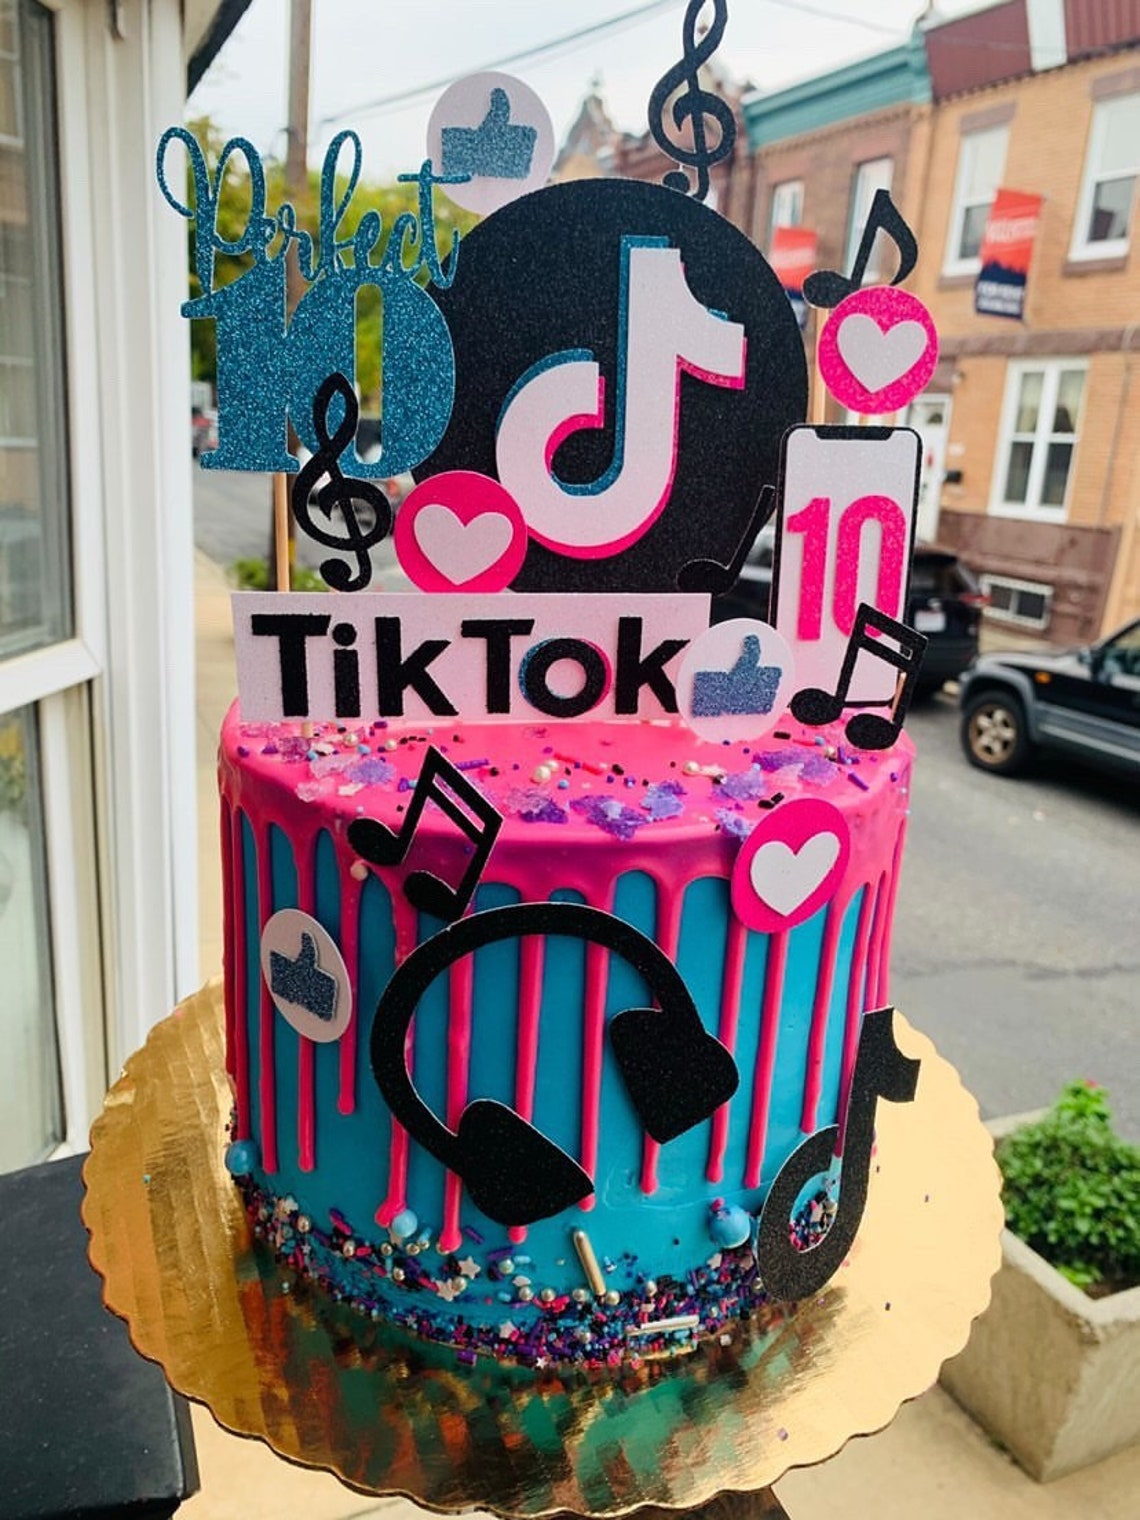 TikTok cake topperTikTok cake ideas TikTok inspo TikTok | Etsy